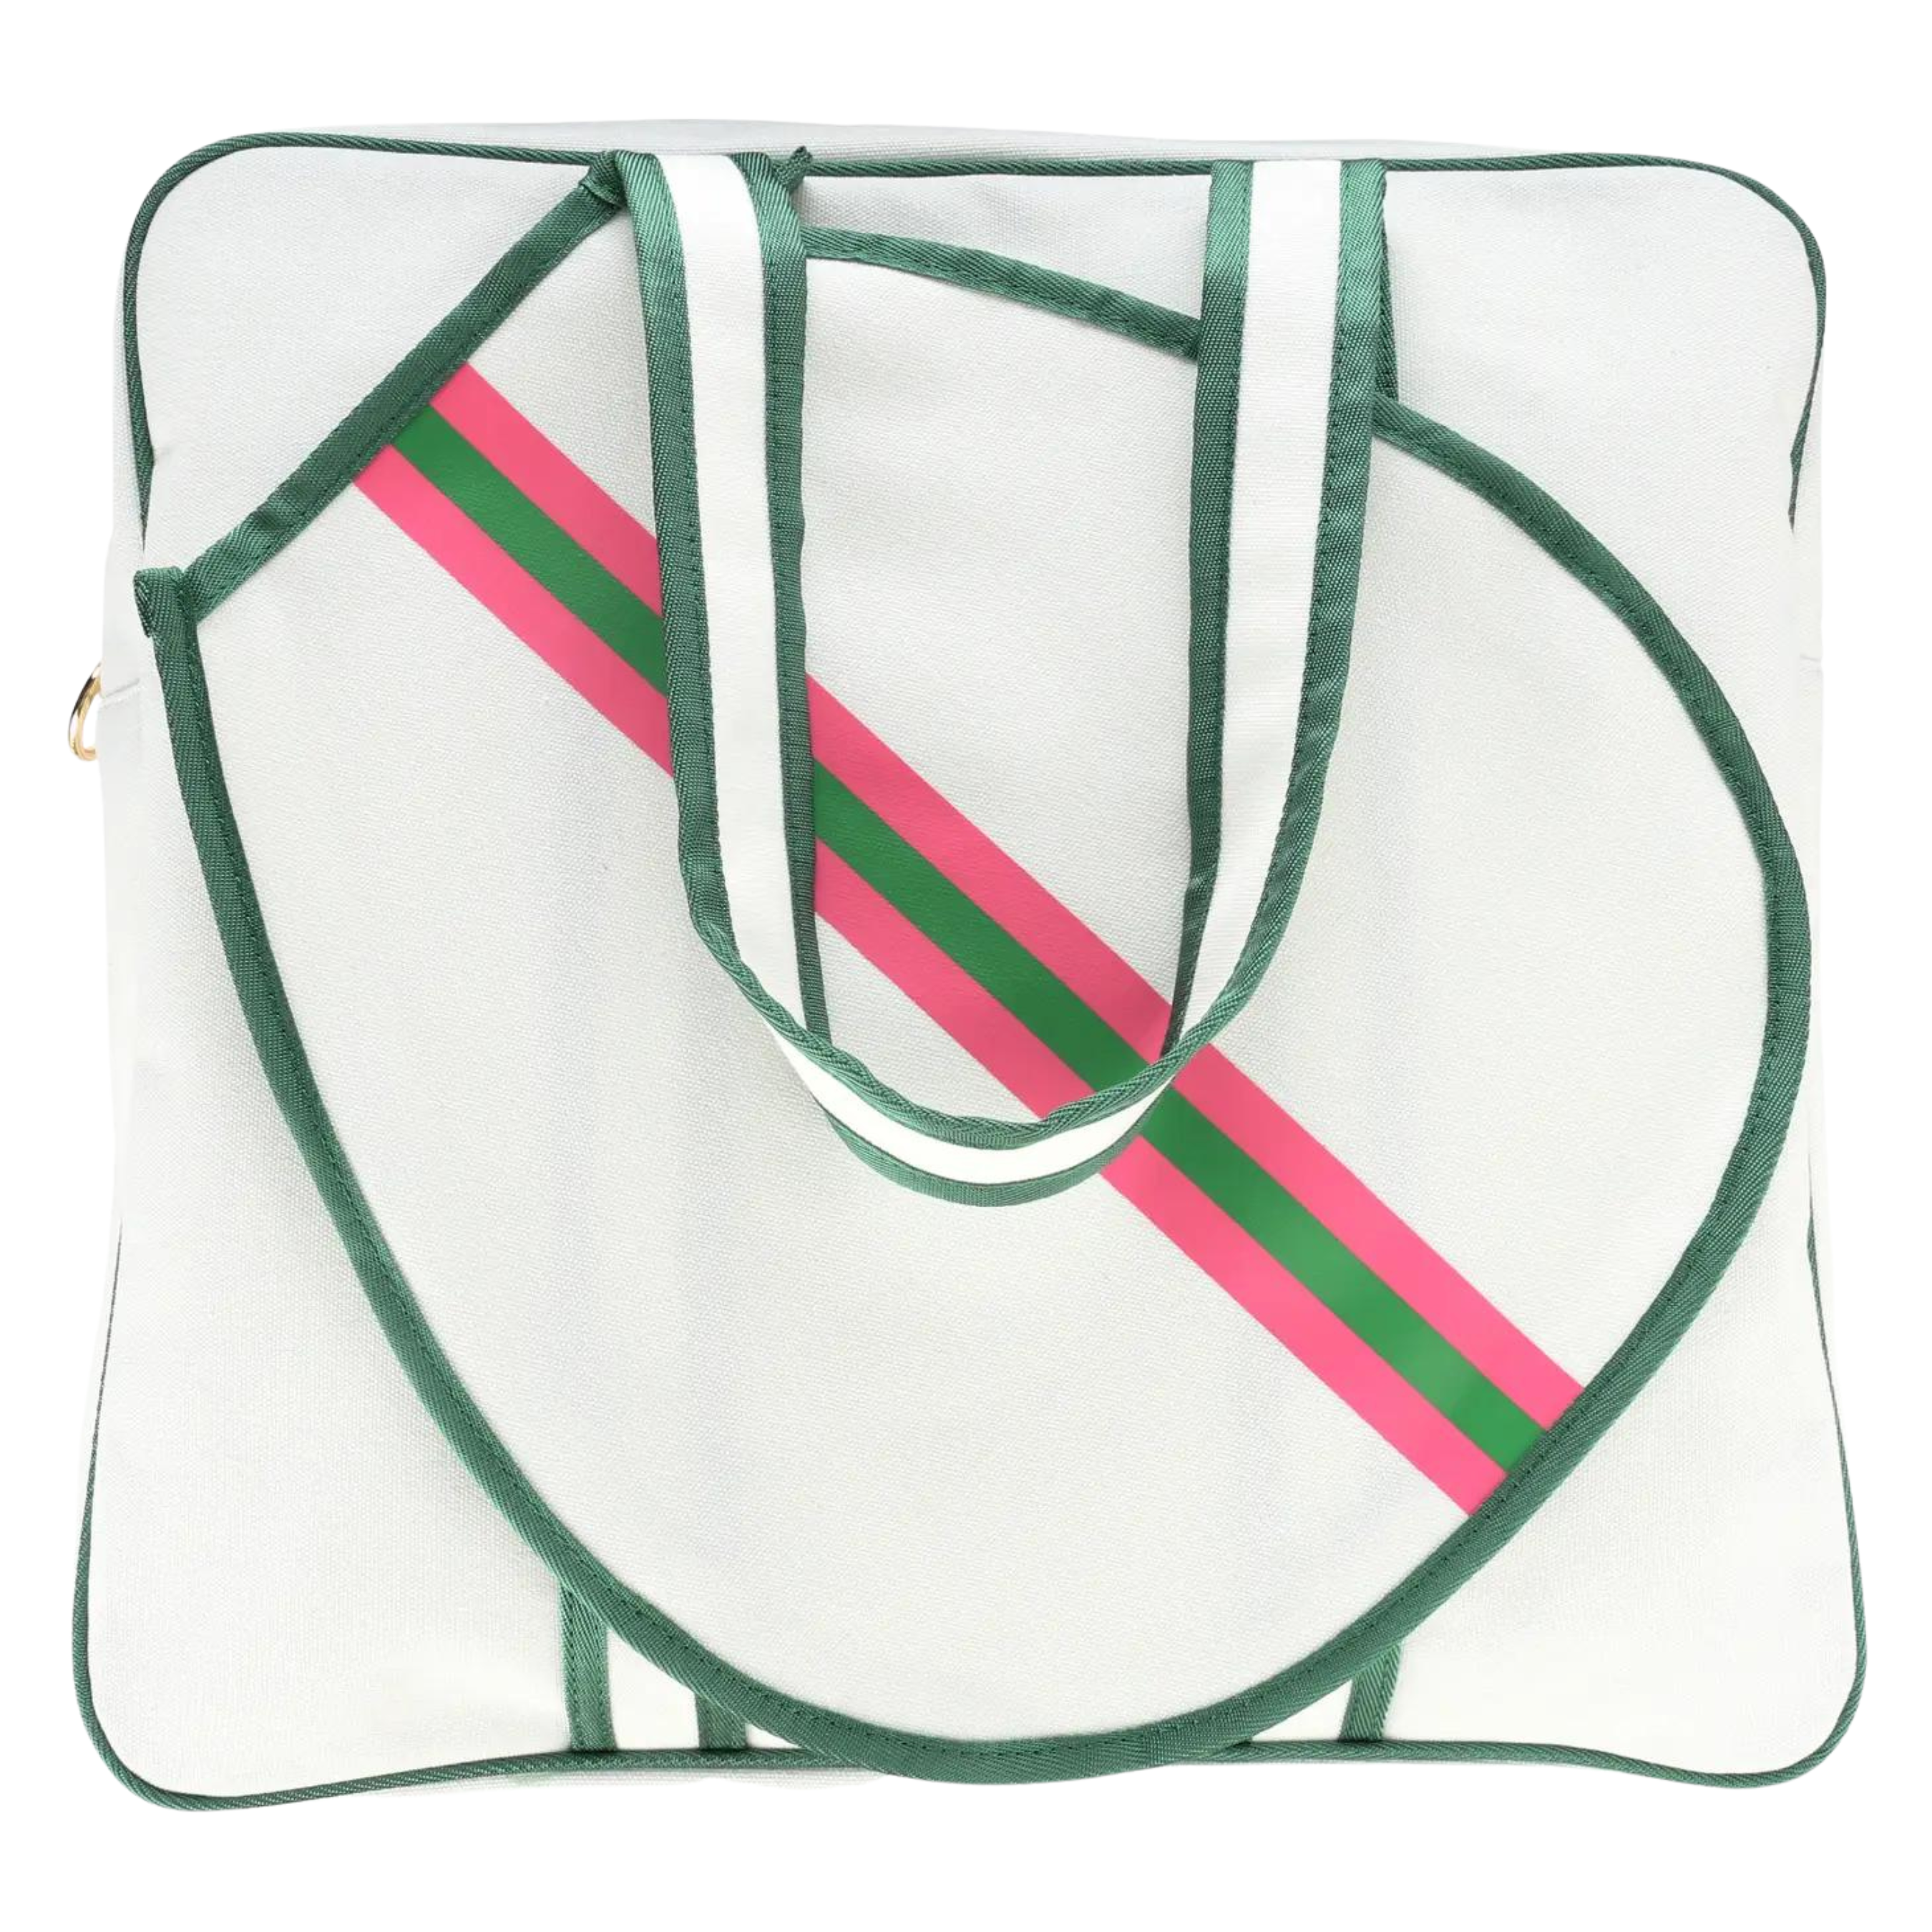 Milly-kate-tennis-bag-pink-green-stripe-georgia-kate-boutique